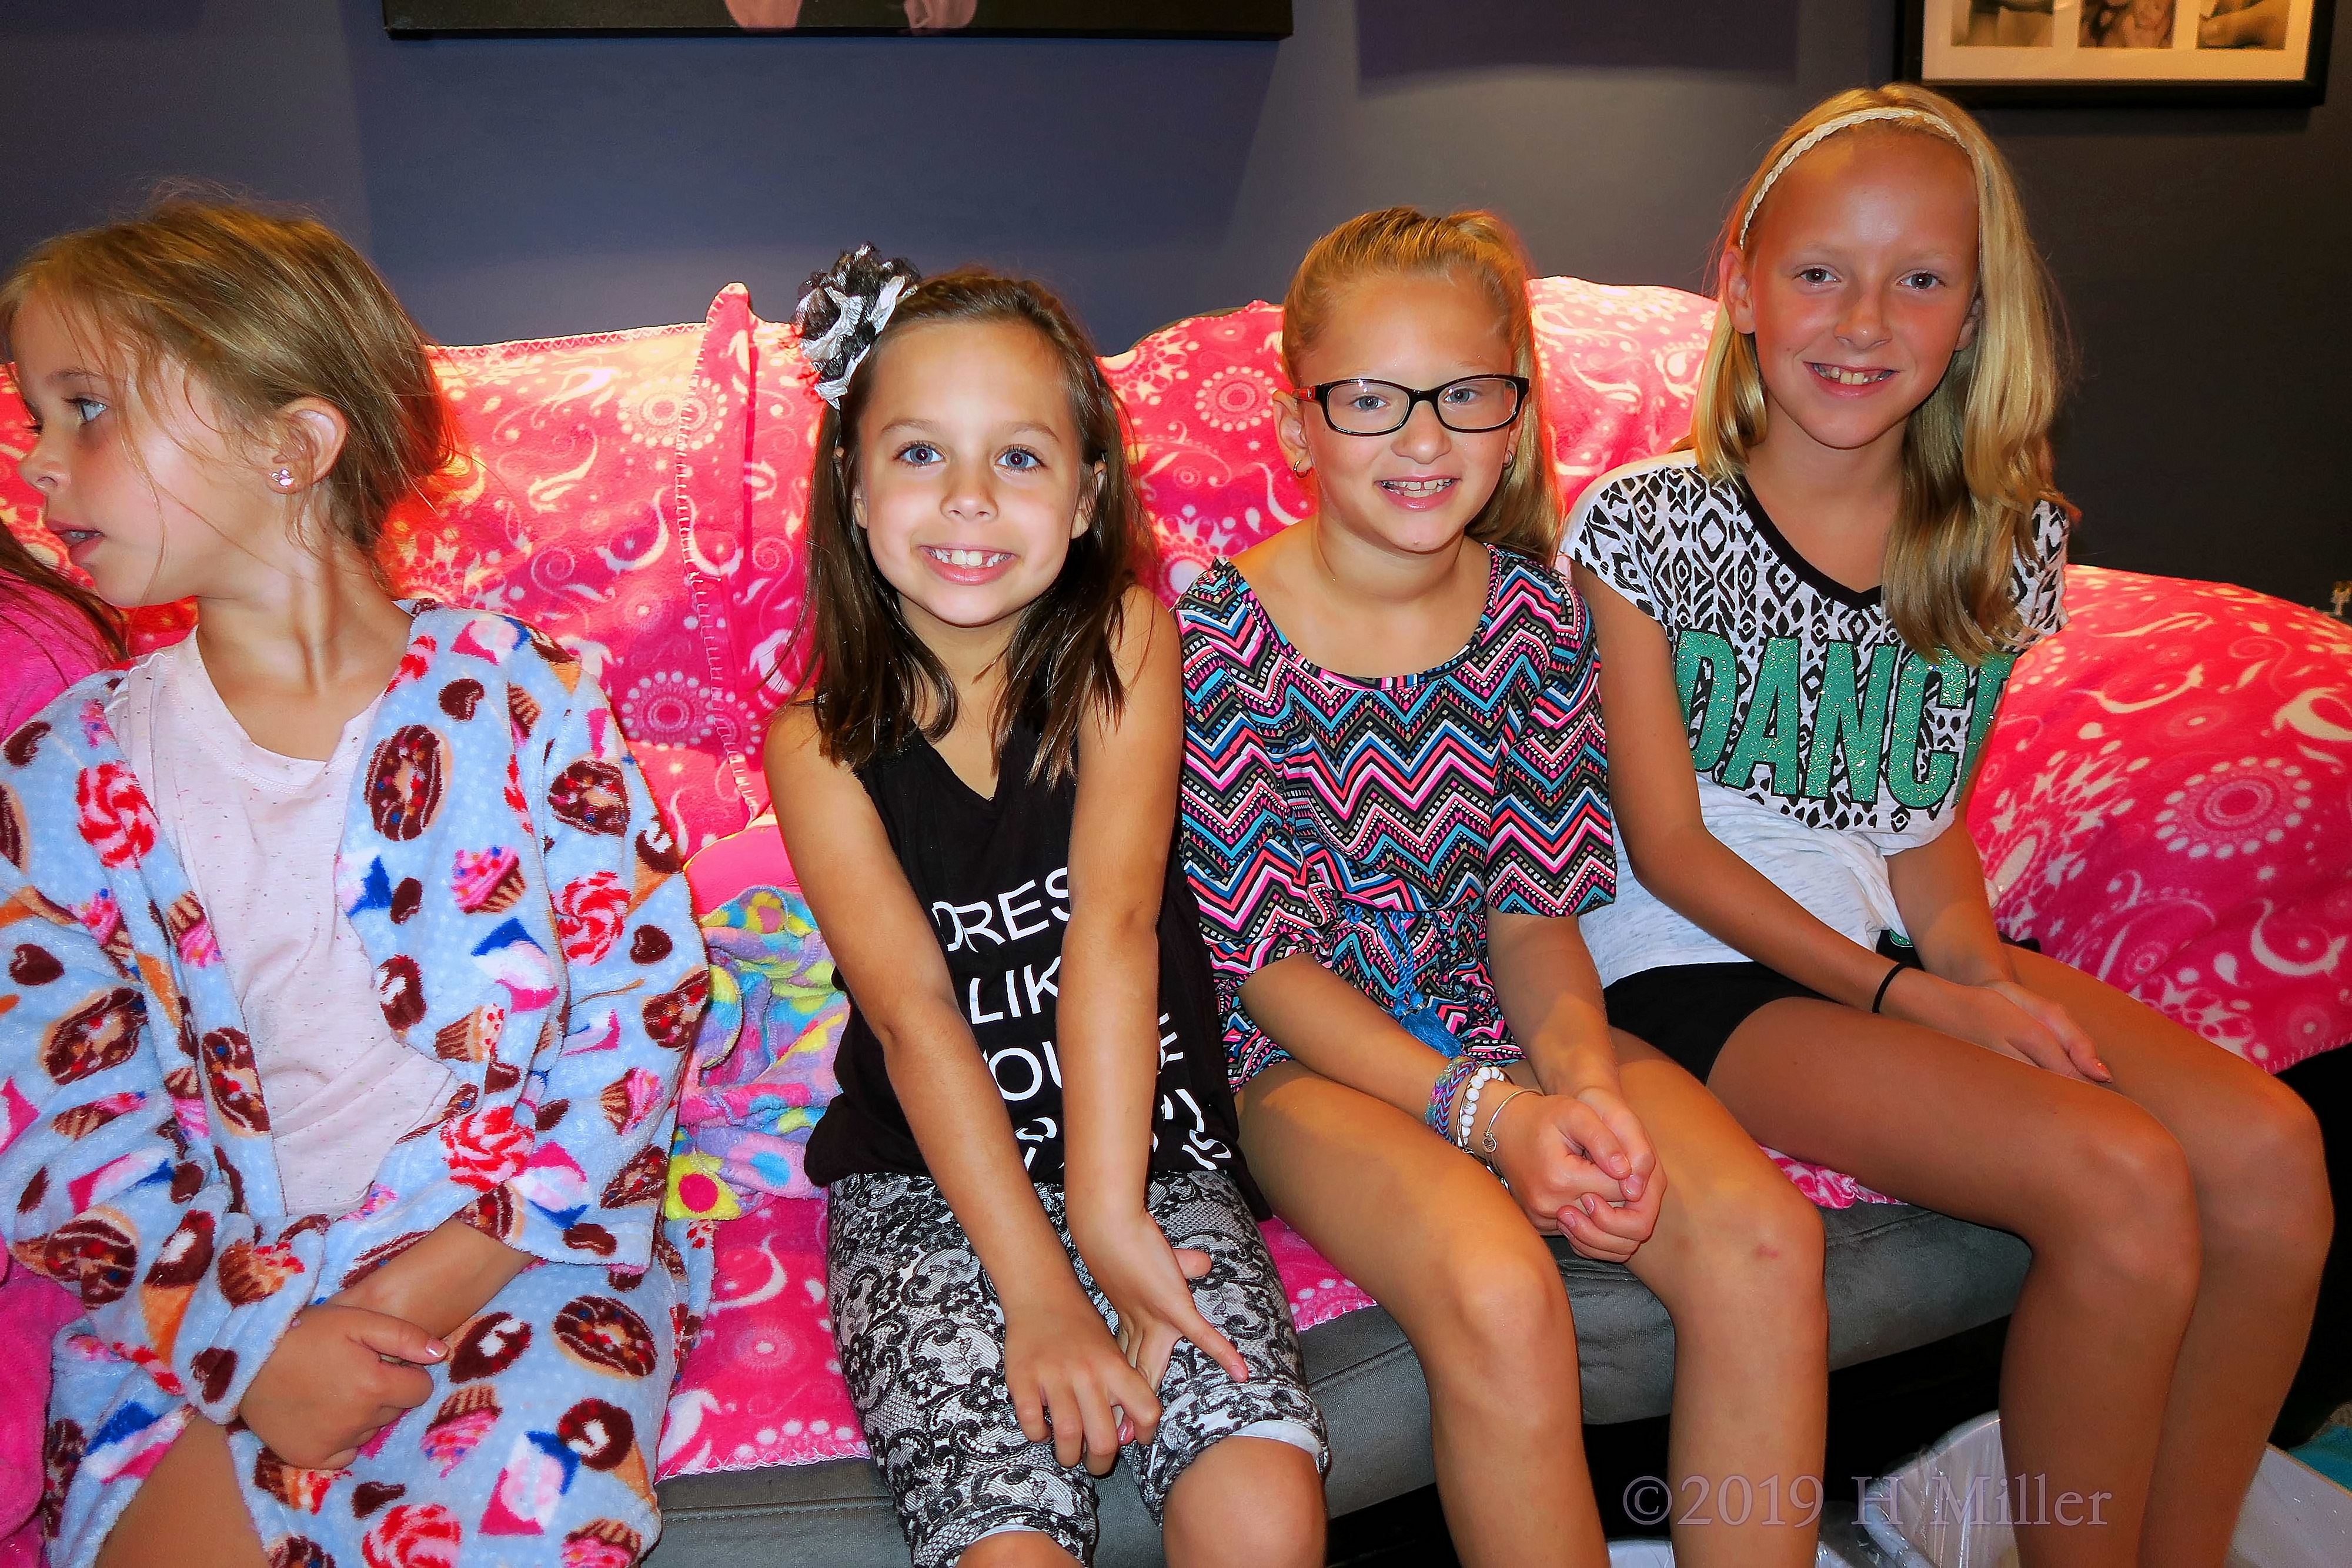 New Fashioned Nail Salon! Kids Pedis At The Kids Spa Party! 